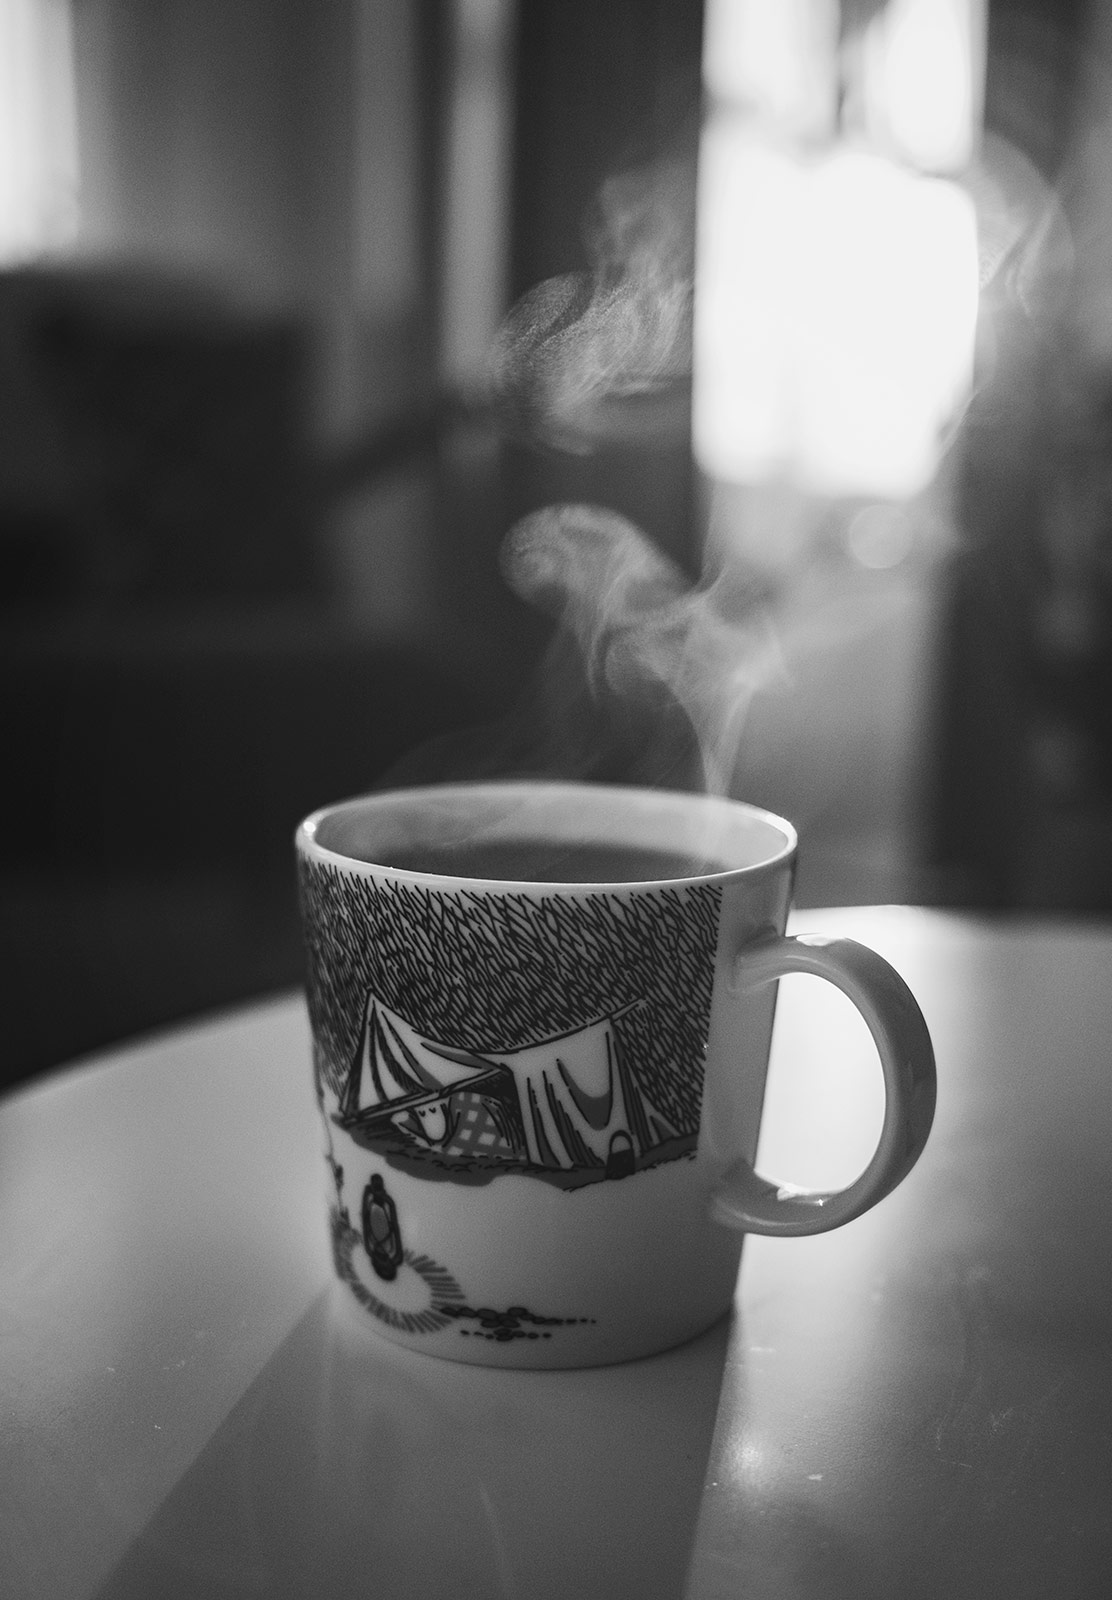 Steam rising out of mug